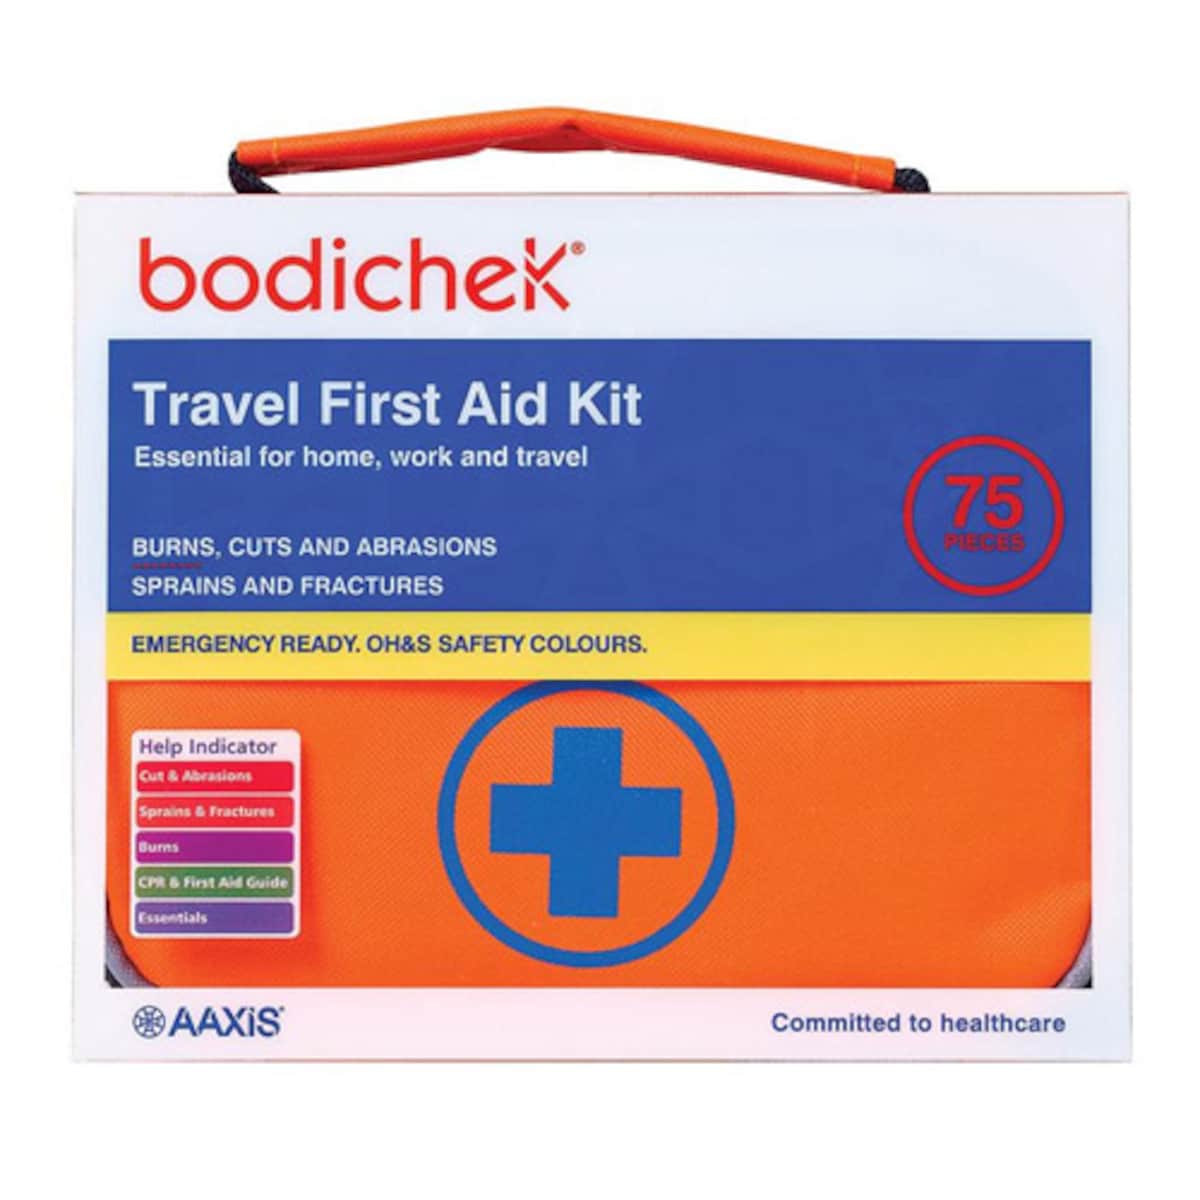 Bodichek First Aid Kit 75 Pieces